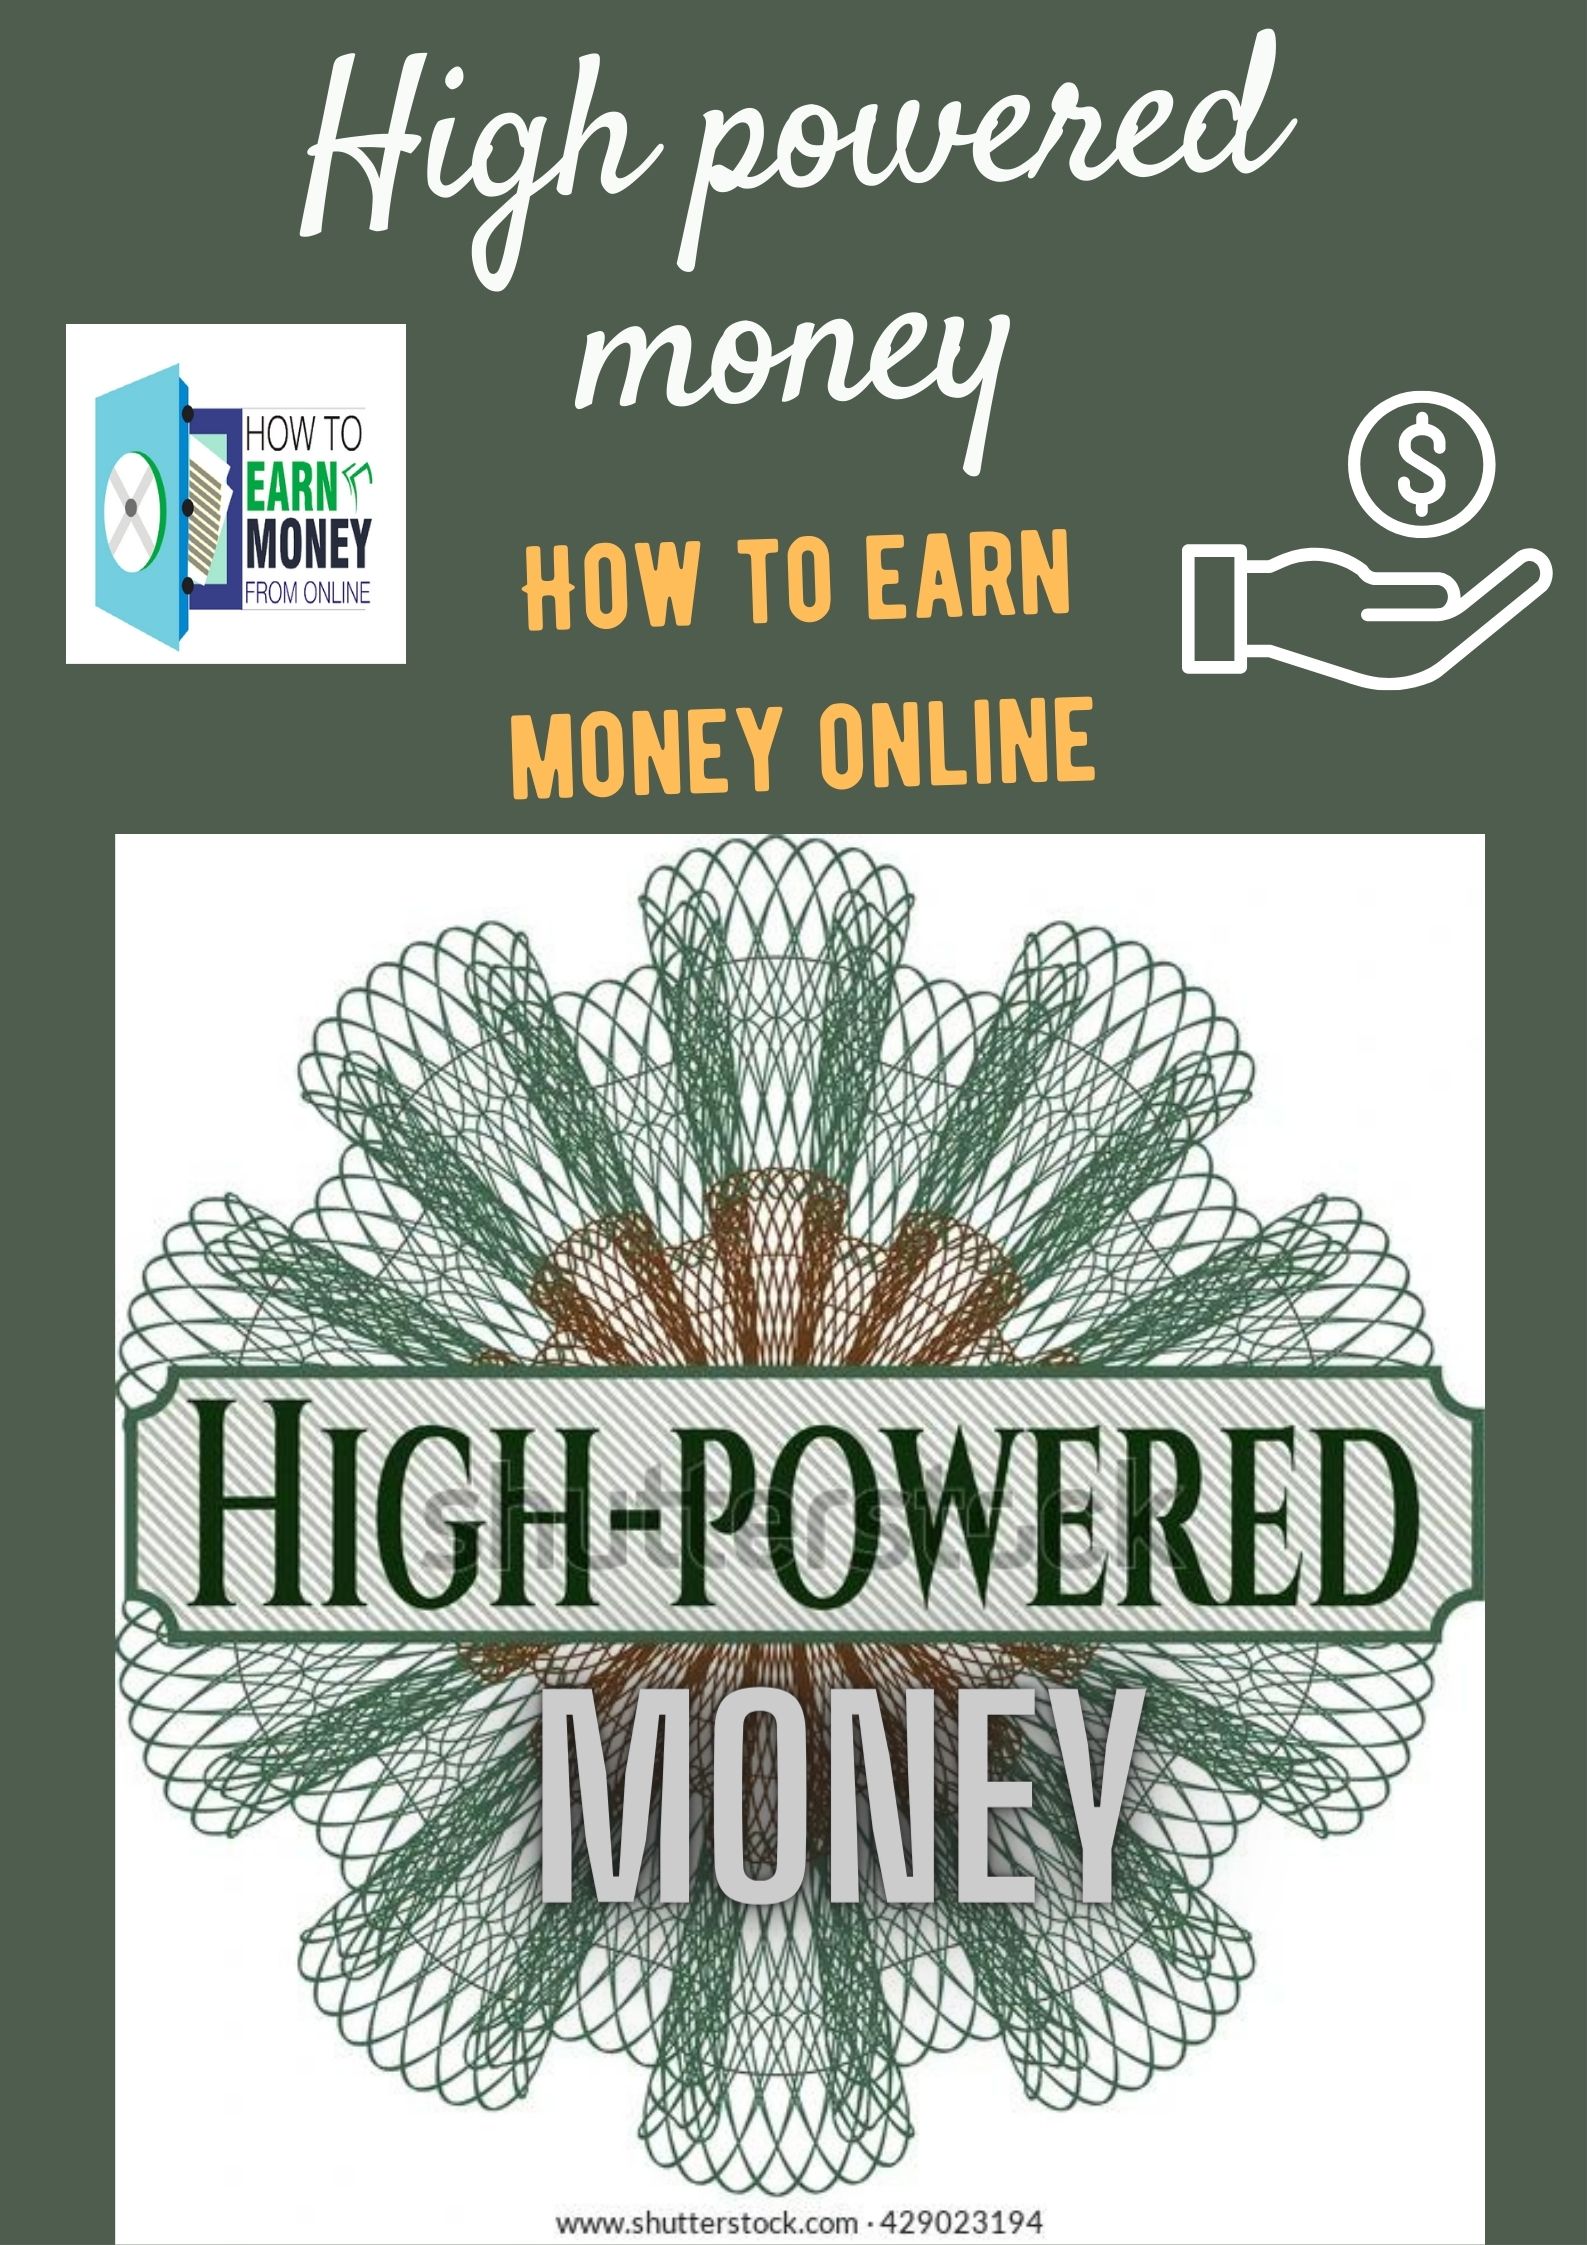 High powered money